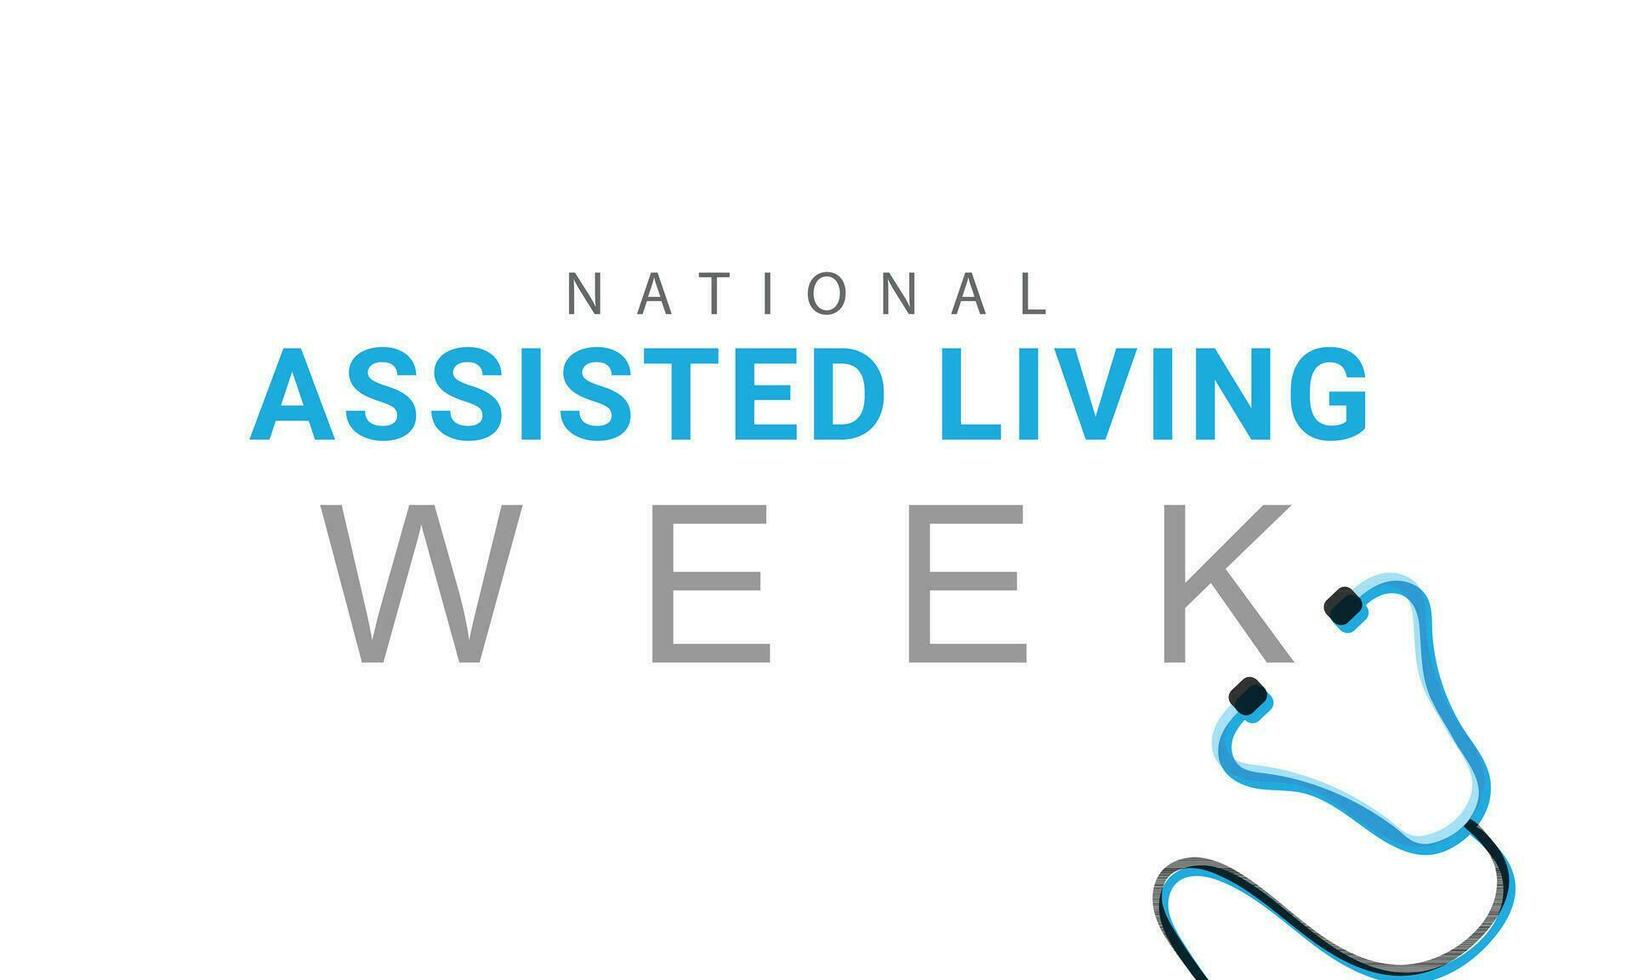 National assisted living week. background, banner, card, poster, template. Vector illustration.